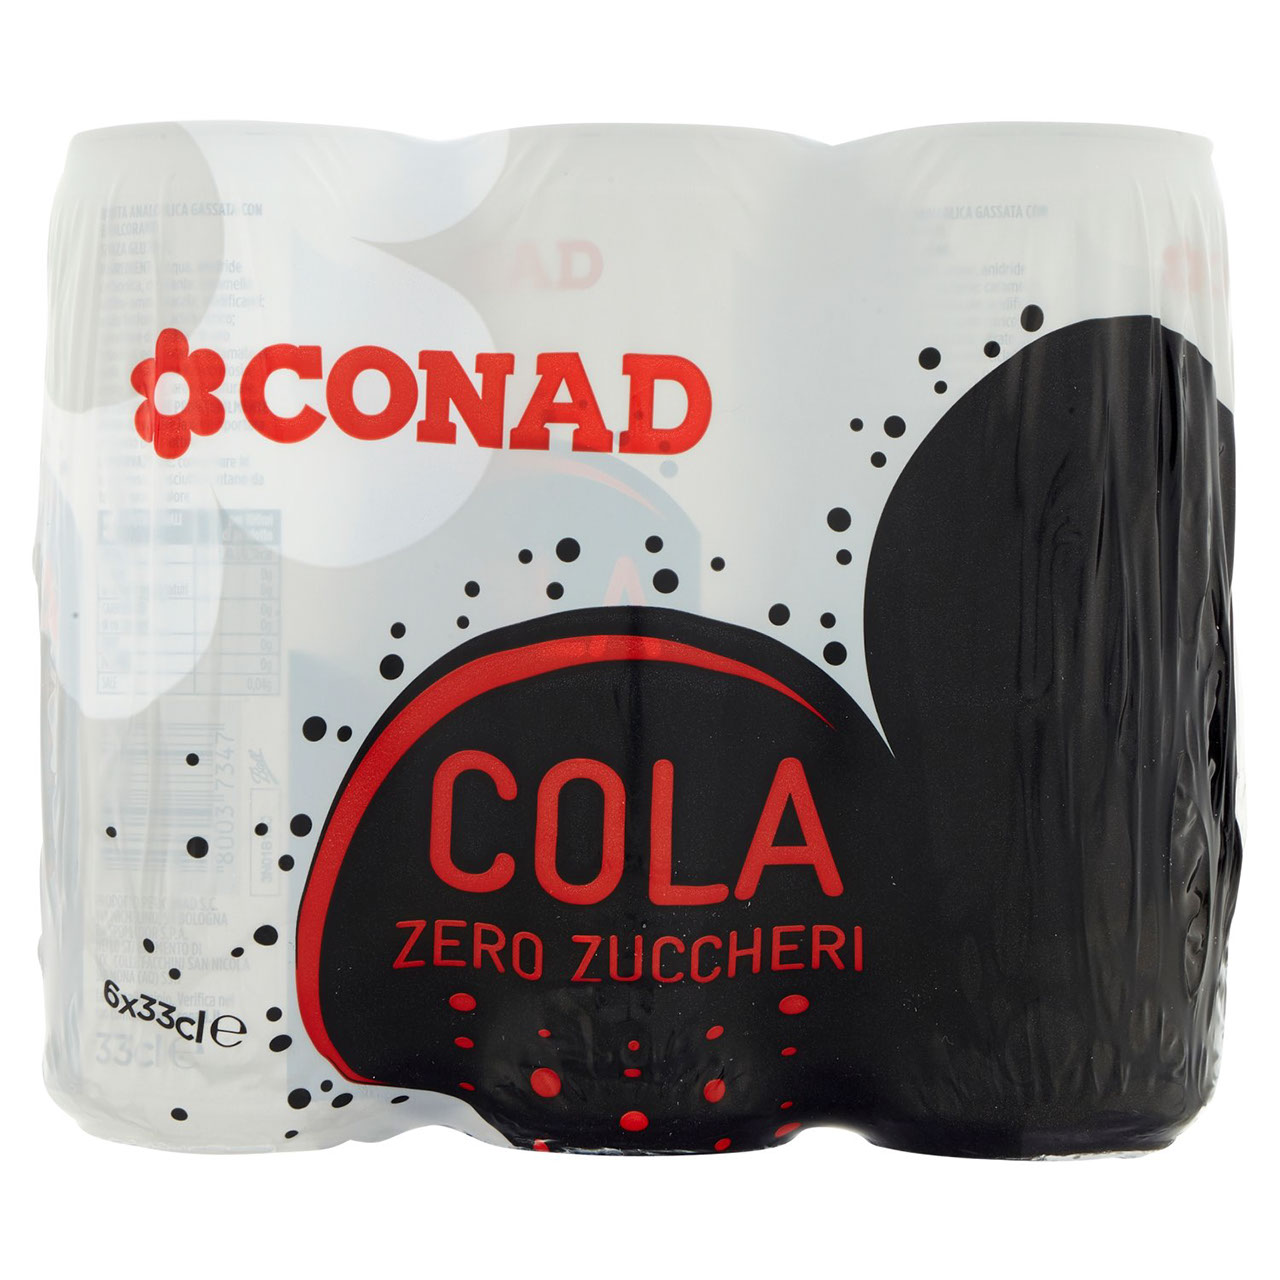 Cola Zero Zuccheri 6 x 33 cl Conad